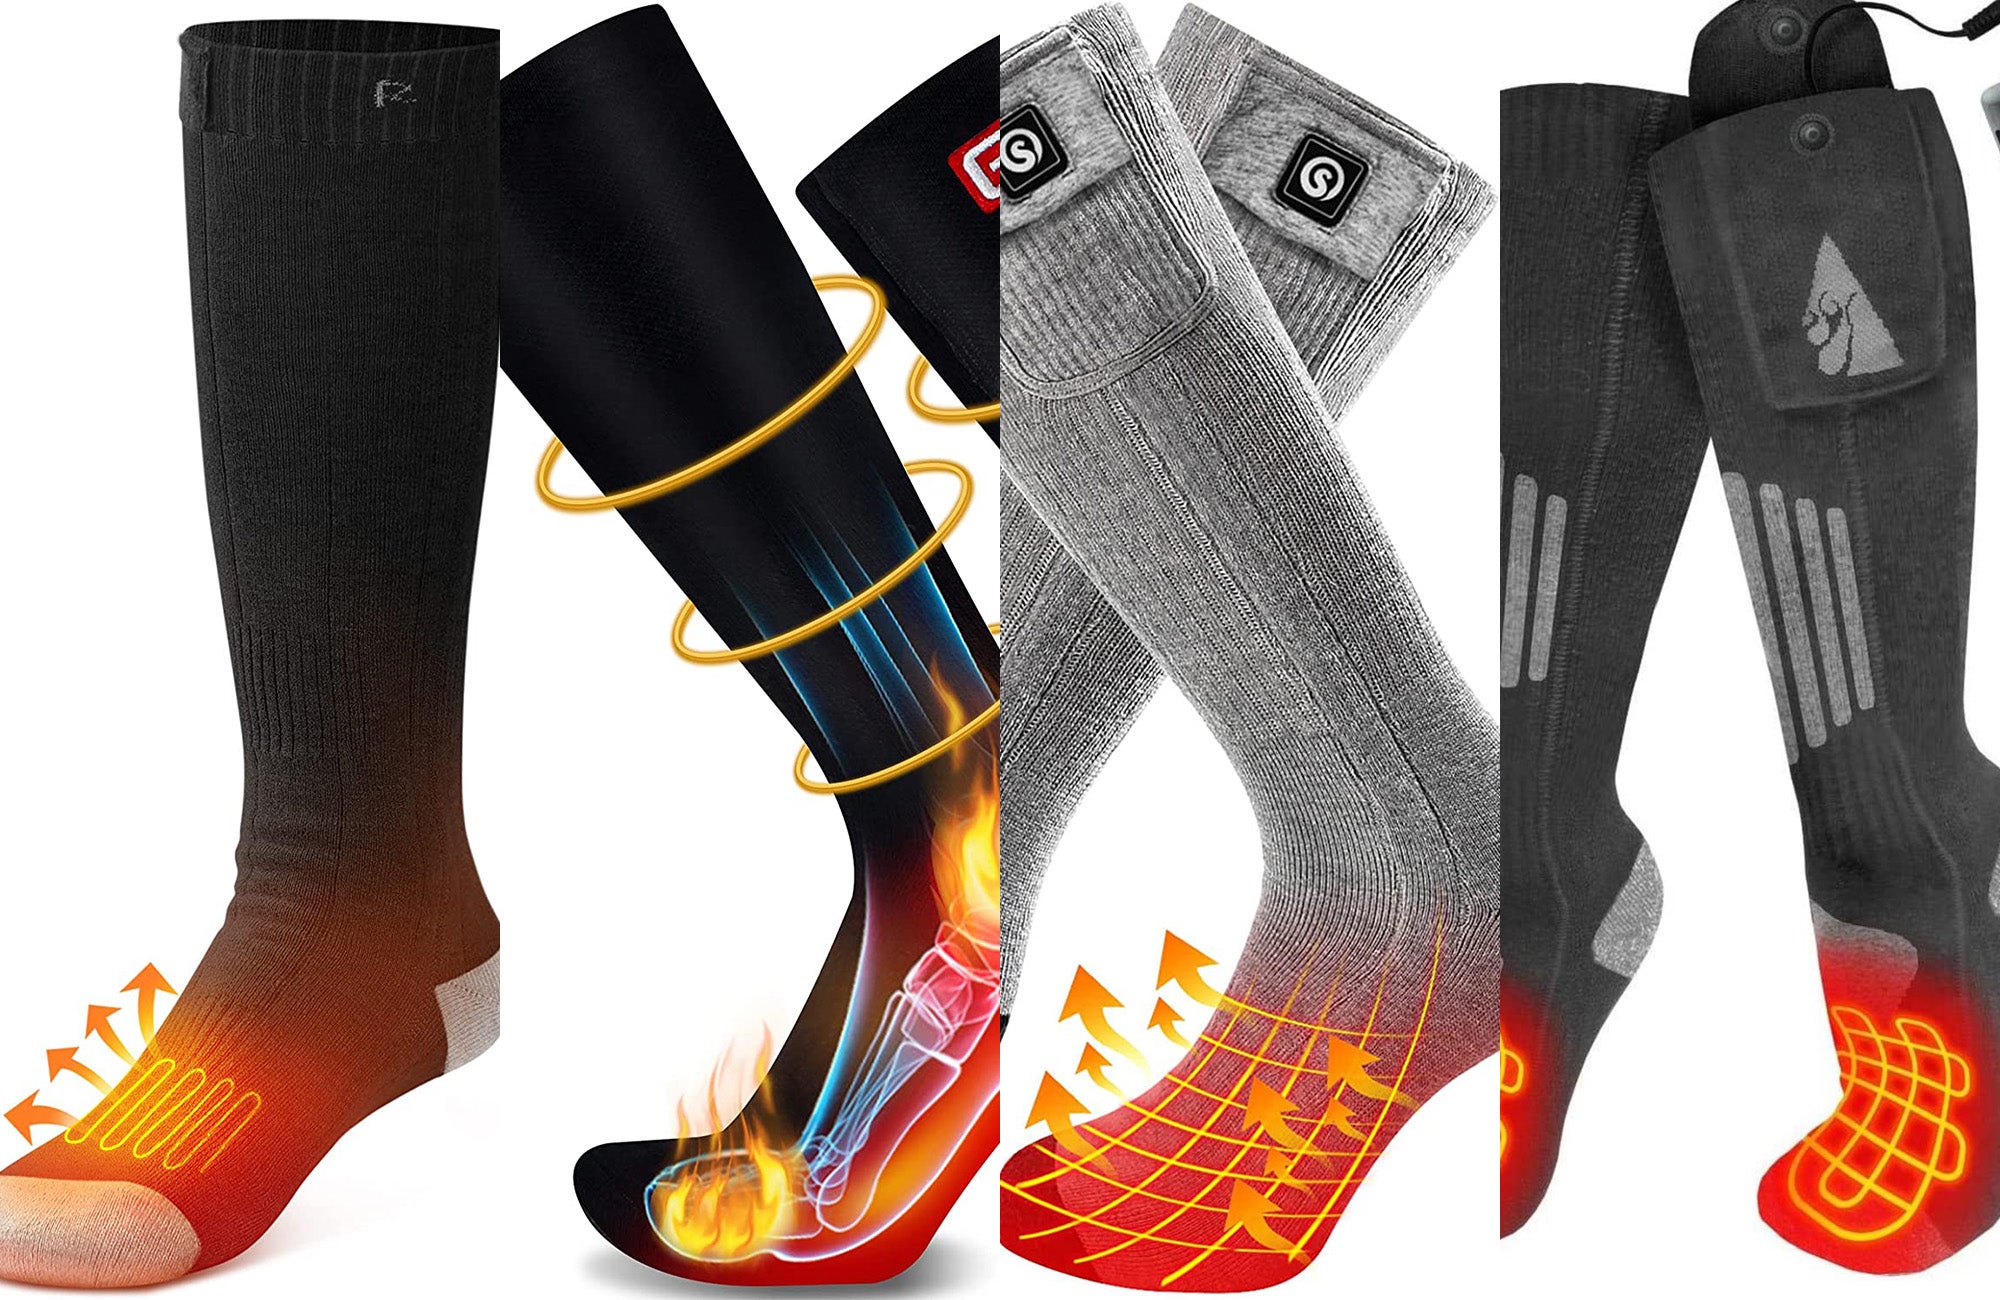 Electric Heated Socks for Ski Camping,Foot Warmer Heated Socks for Men Women 